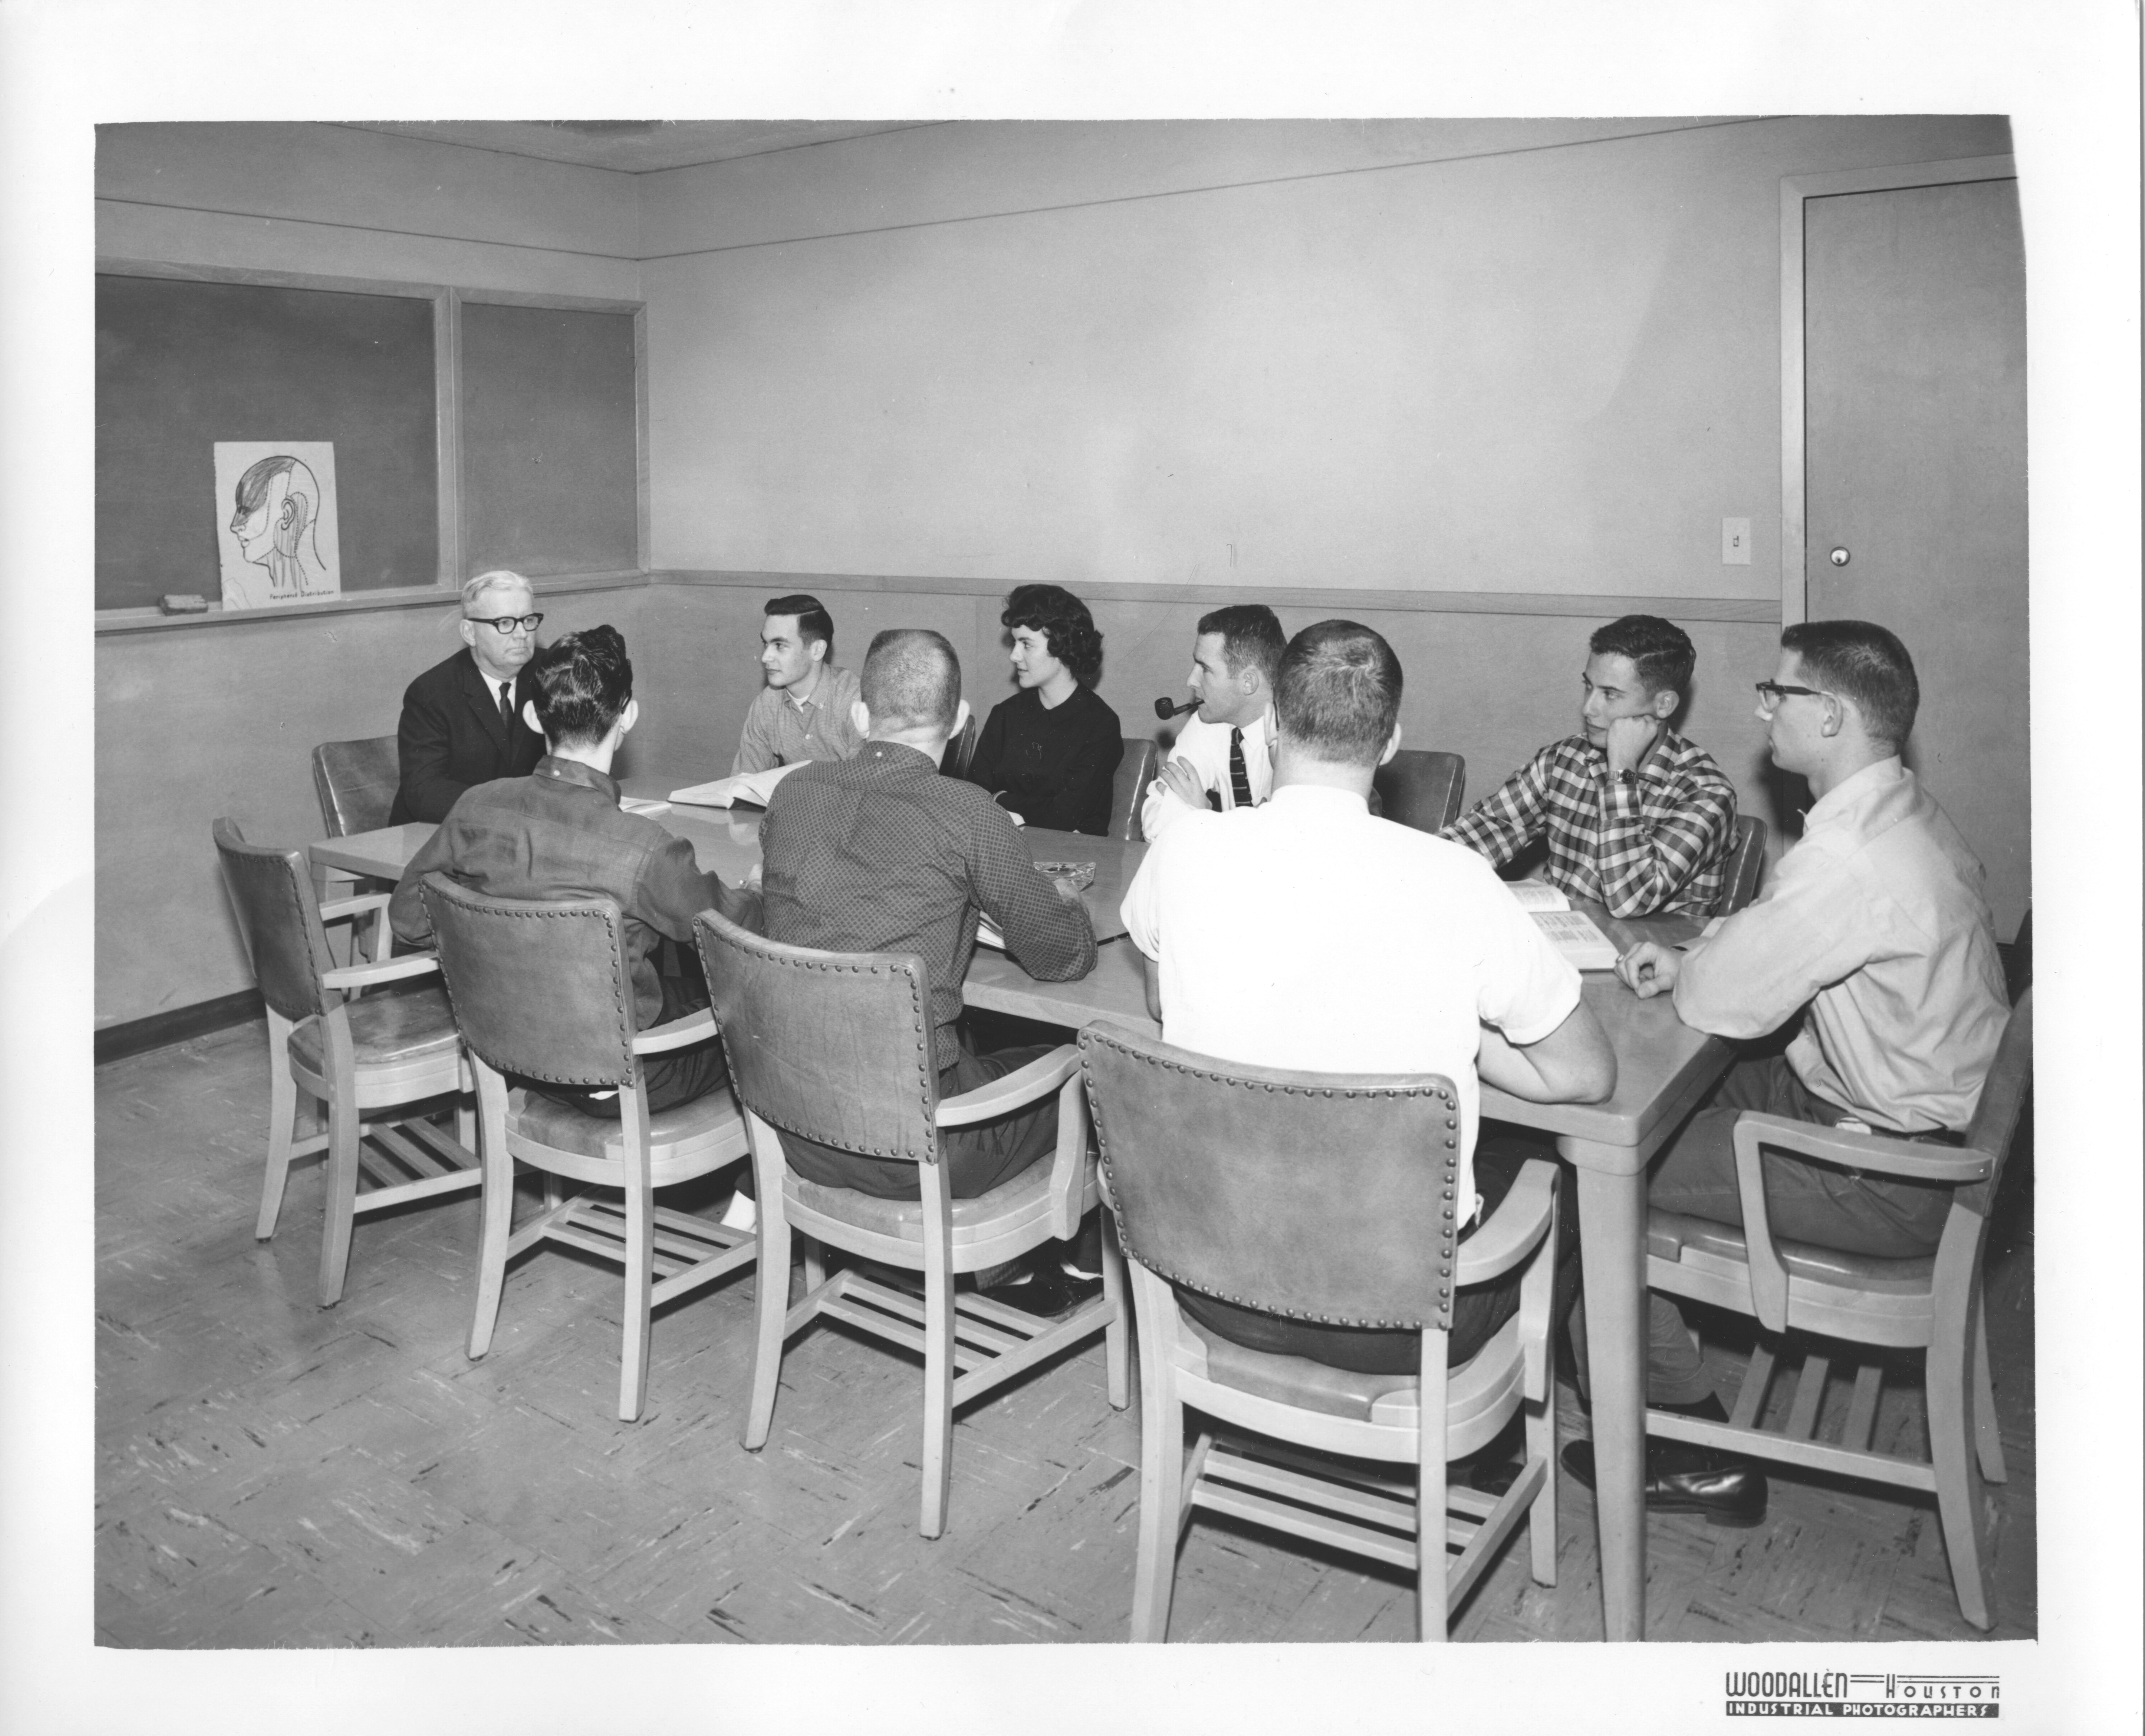 Seminar Room, 1961. IC001 HAM-TMC Library records (OV 100), IC098 HAM-TMC Library Historical Photograph Collection (P-3359, OV 93), McGovern Historical Center